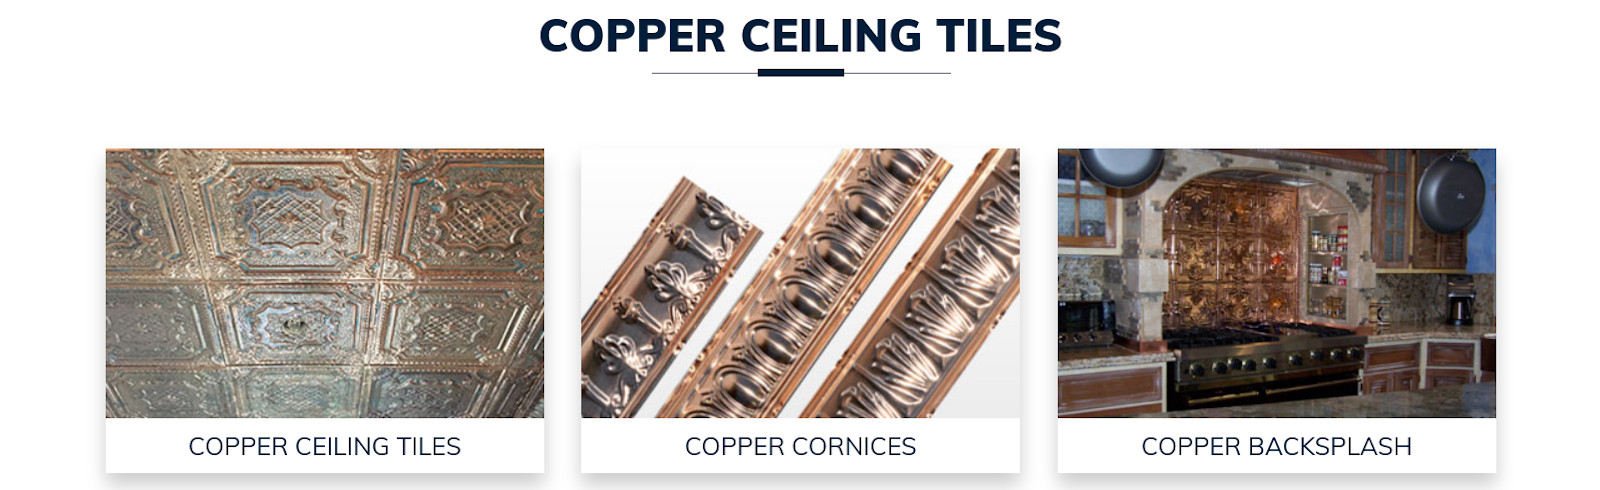 copper ceiling tiles on sale